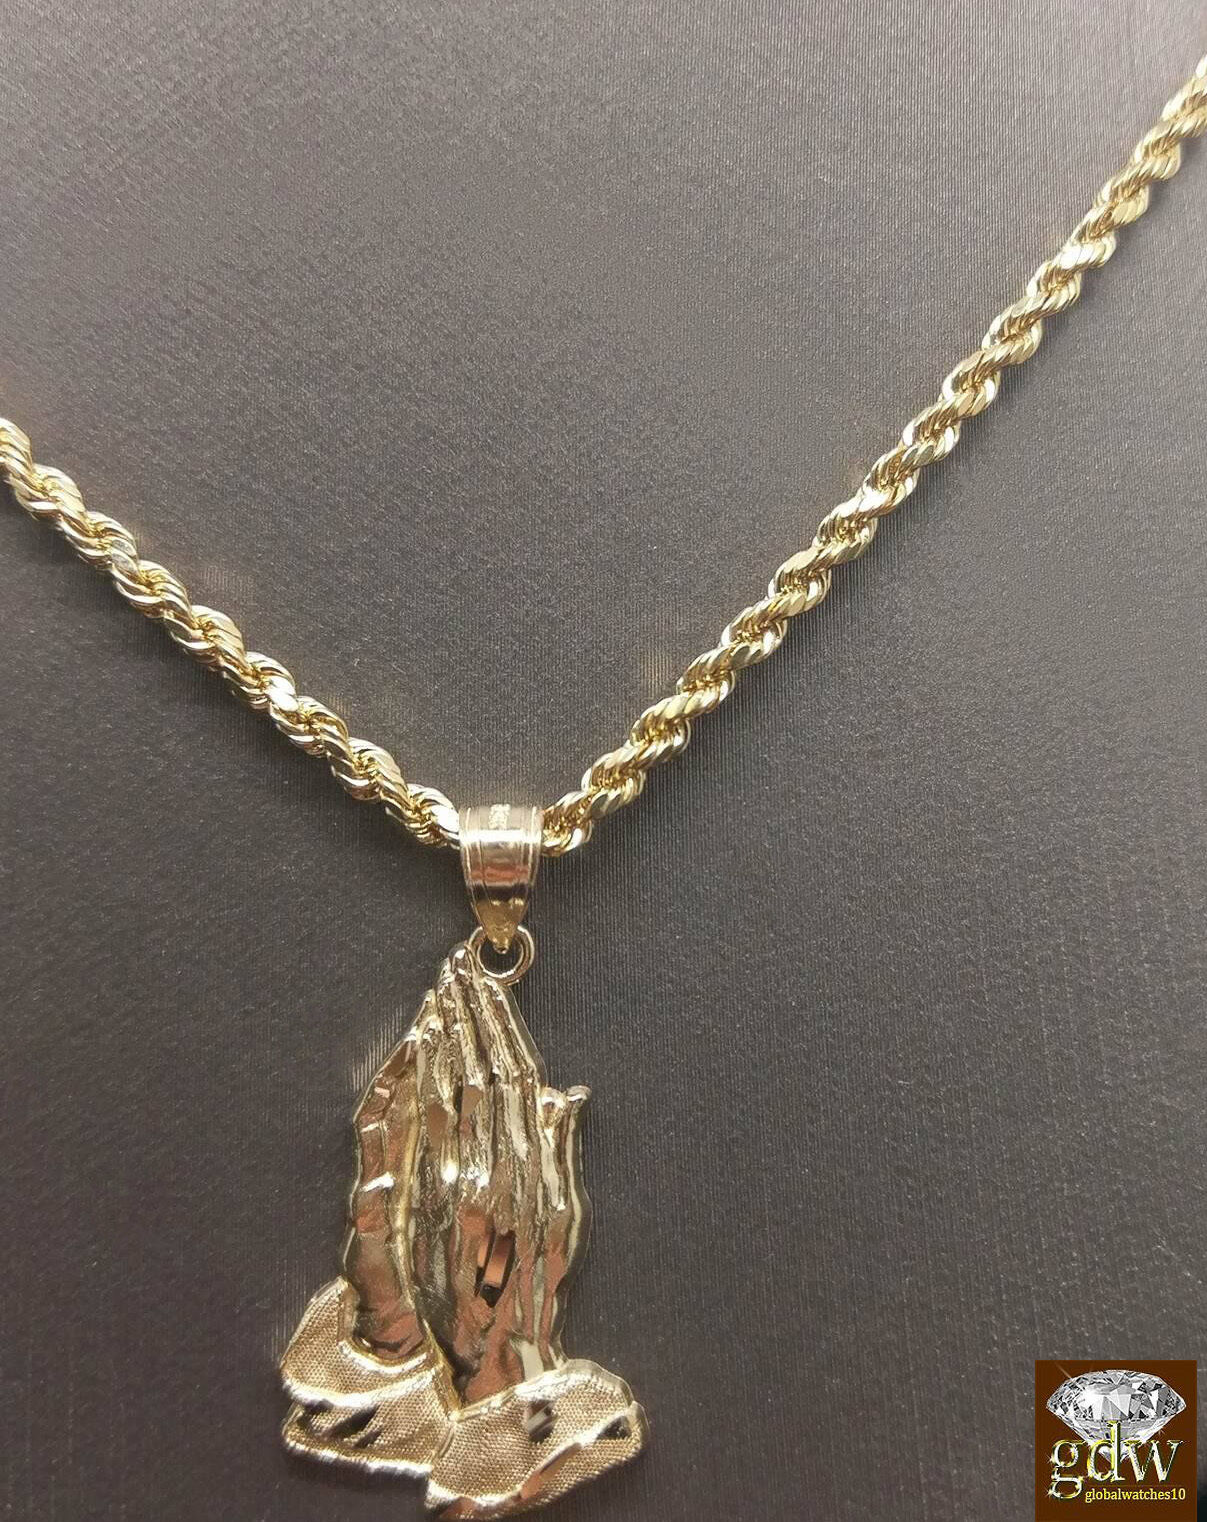 10k Gold Rope Necklace 20" 2mm Chain Praying Hand Charm Pendant Men Women